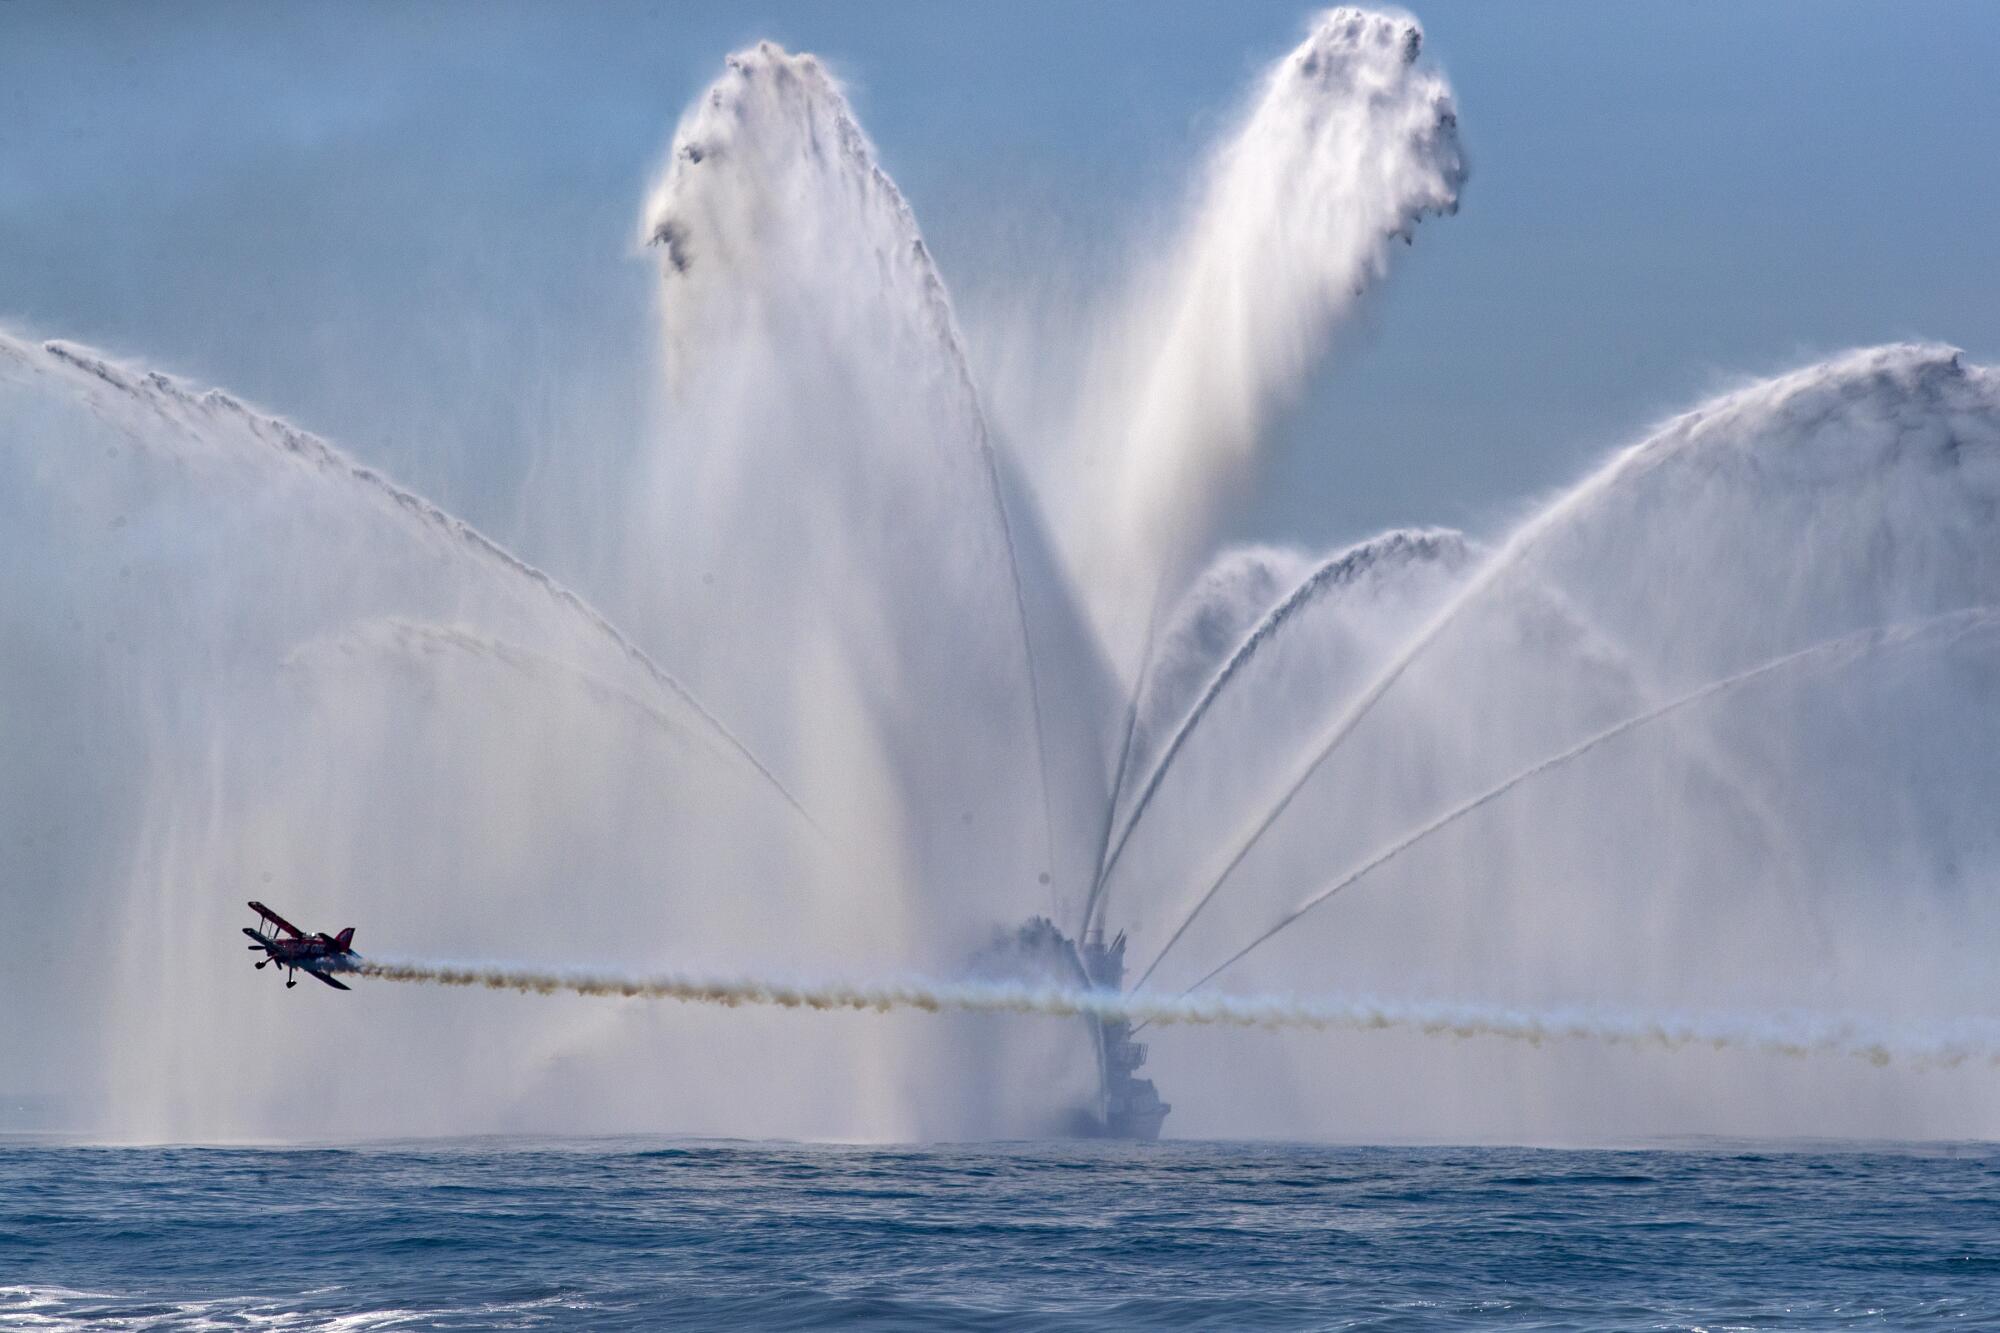 Michael Wiskus flies his biplane past an Orange County fire boat 